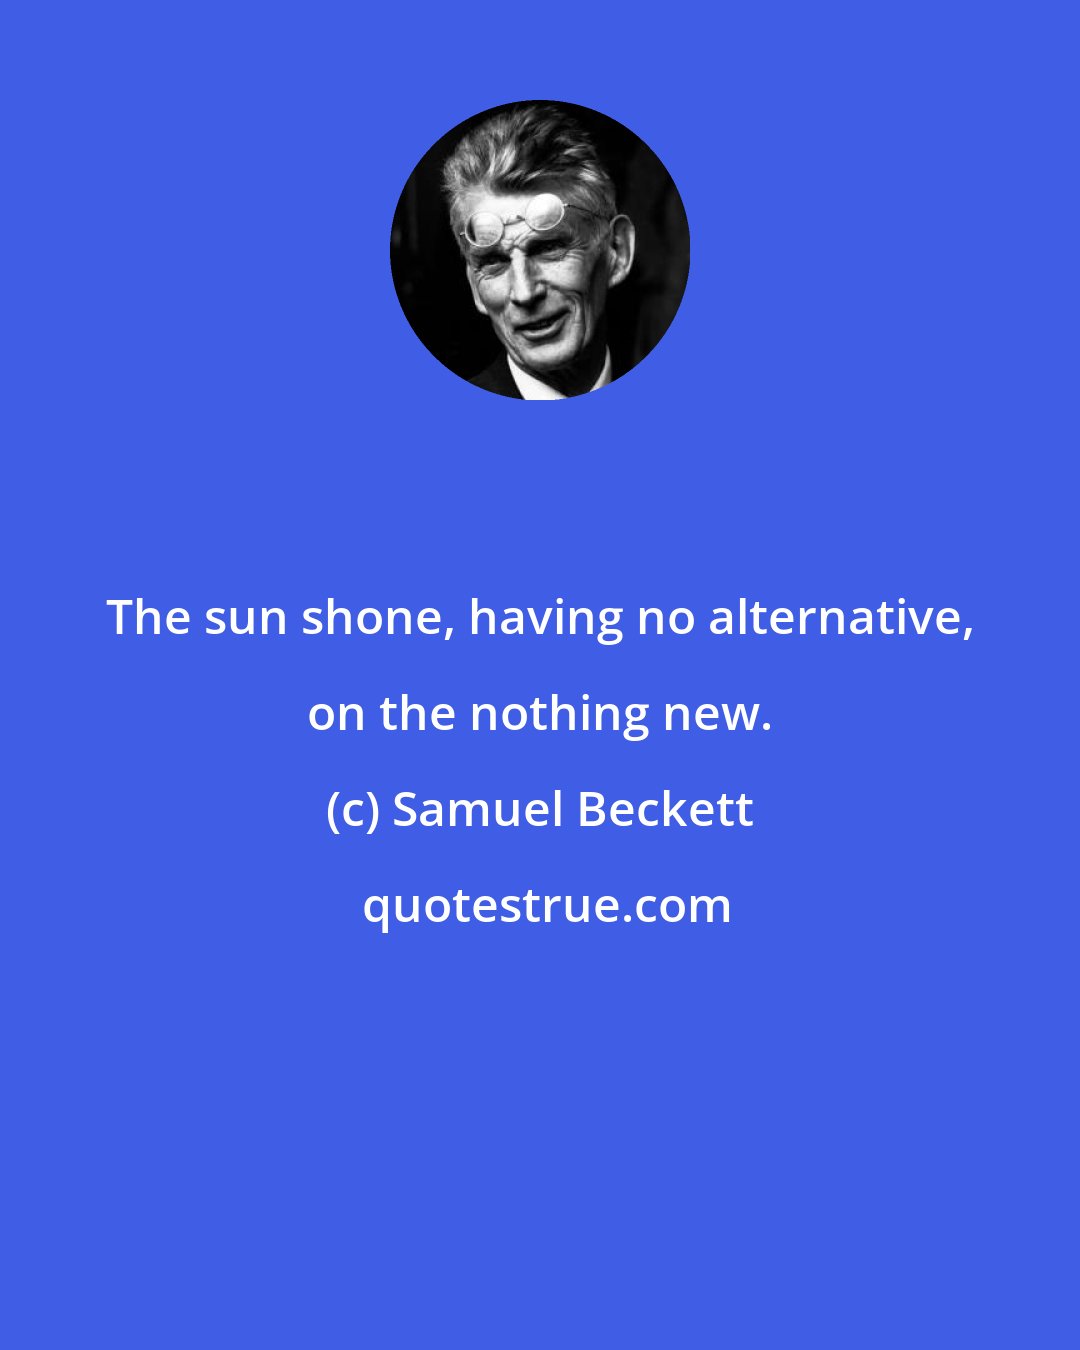 Samuel Beckett: The sun shone, having no alternative, on the nothing new.